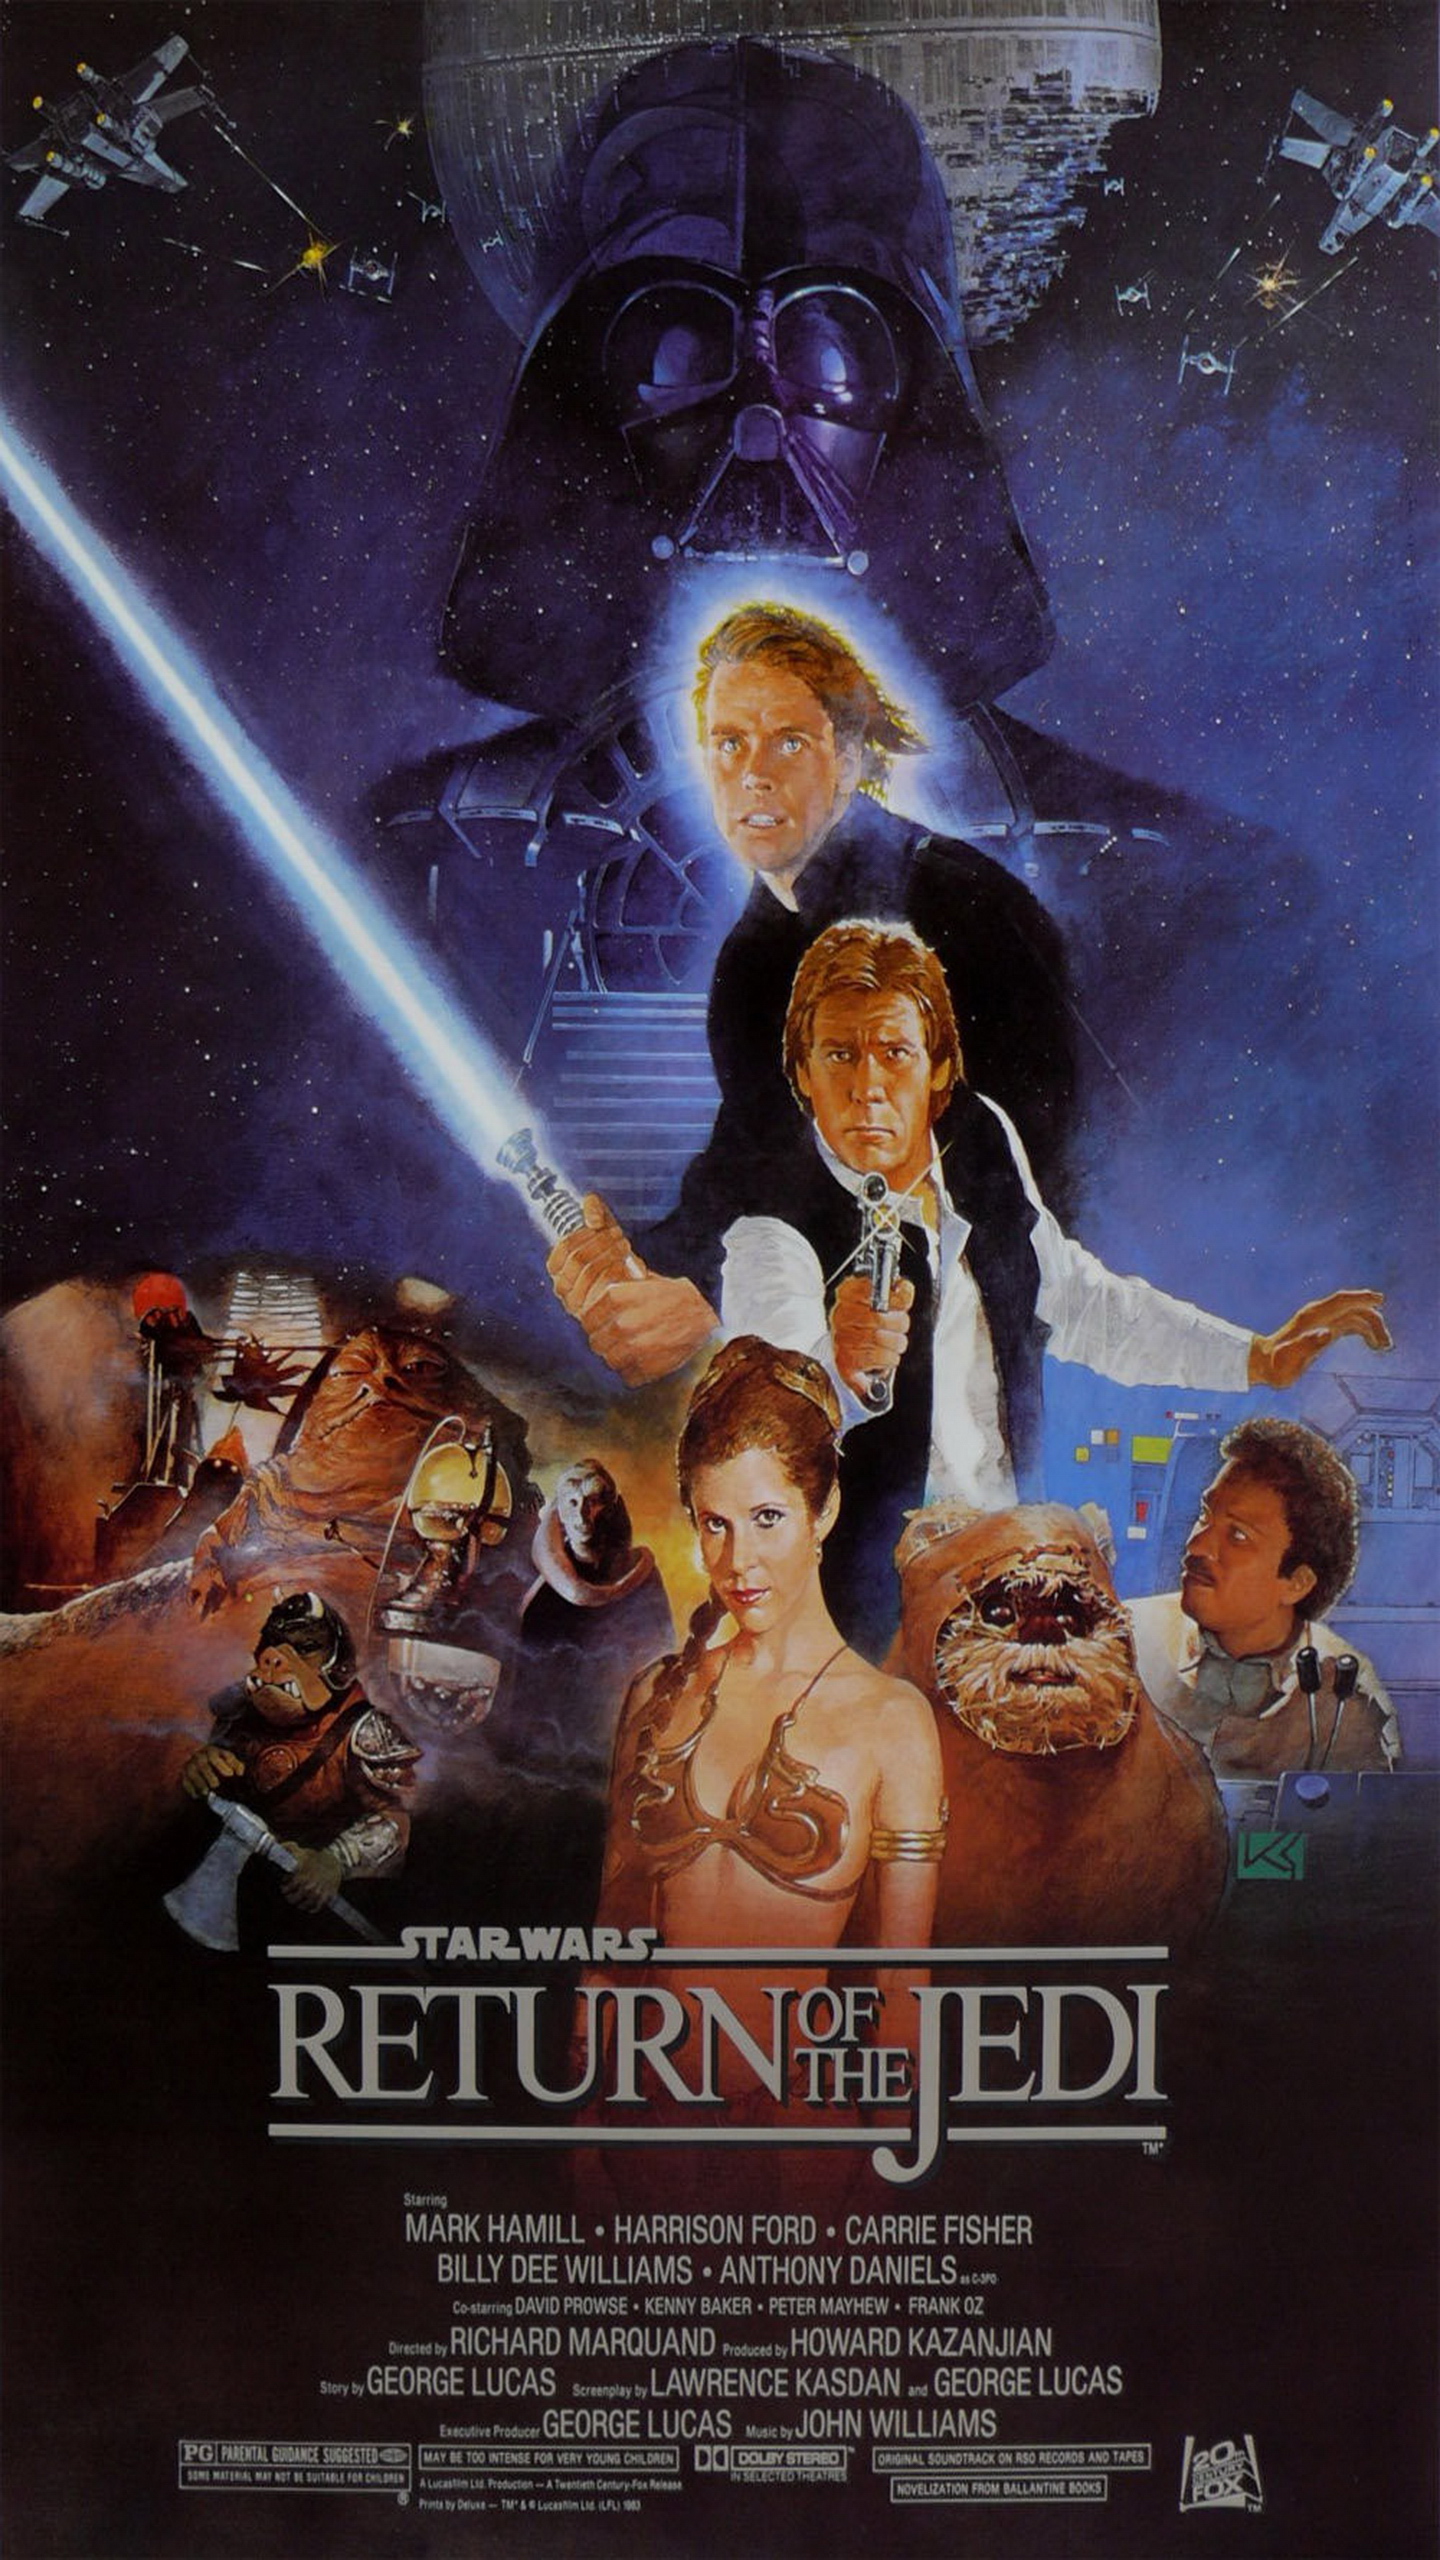 Star Wars Episode VI Return of the Jedi Galaxy Note 4 Wallpaper